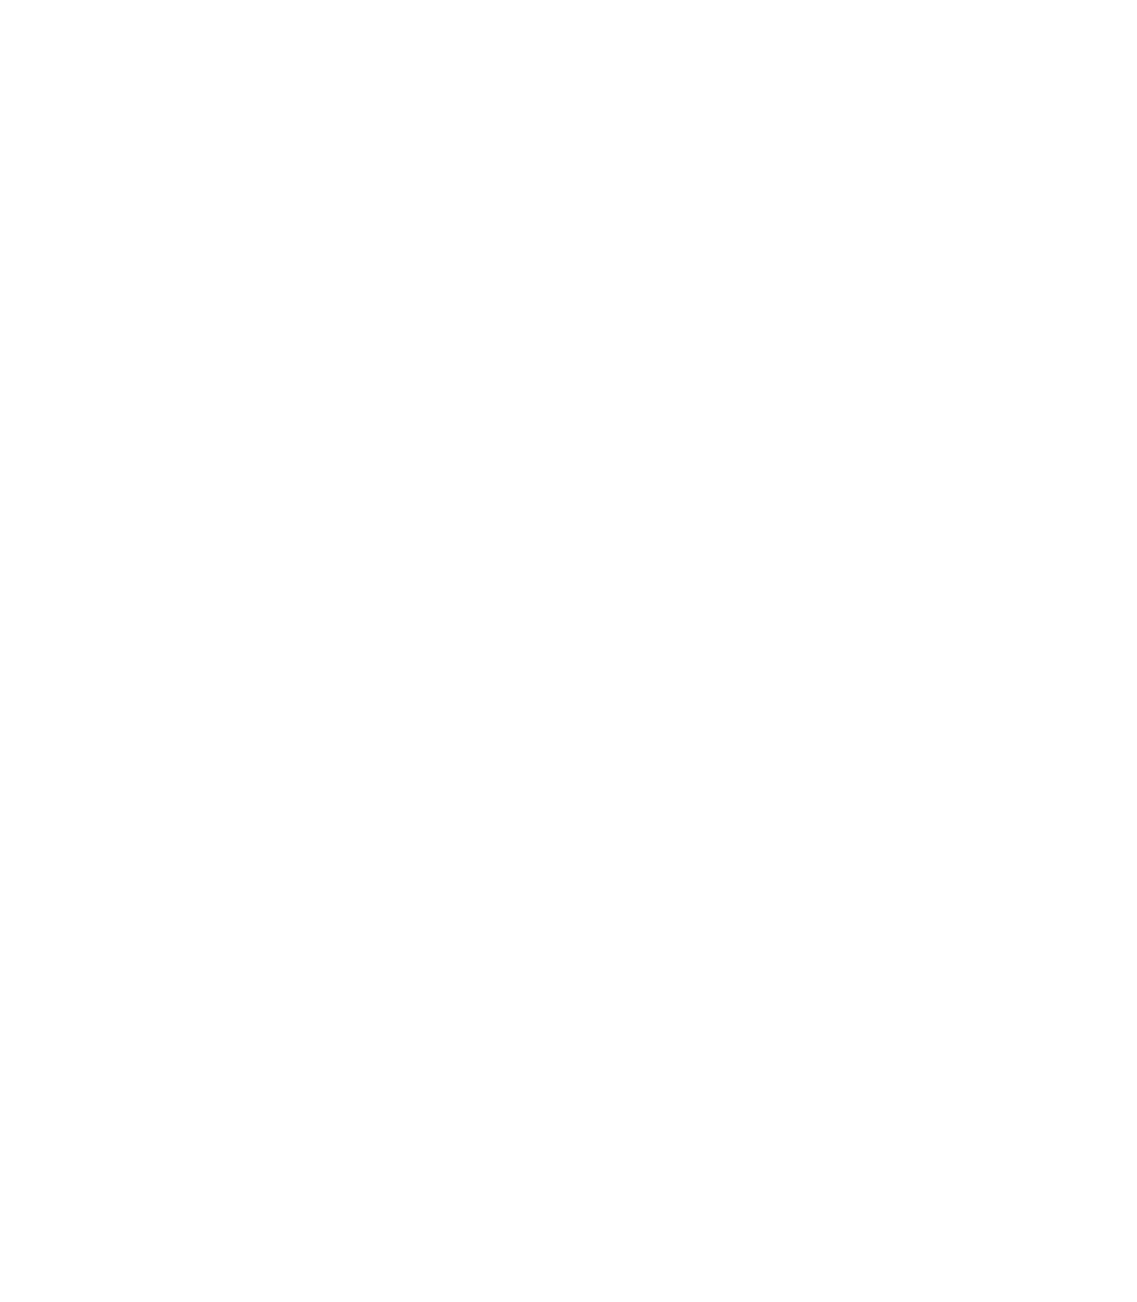 Texas FelineDesigns logo